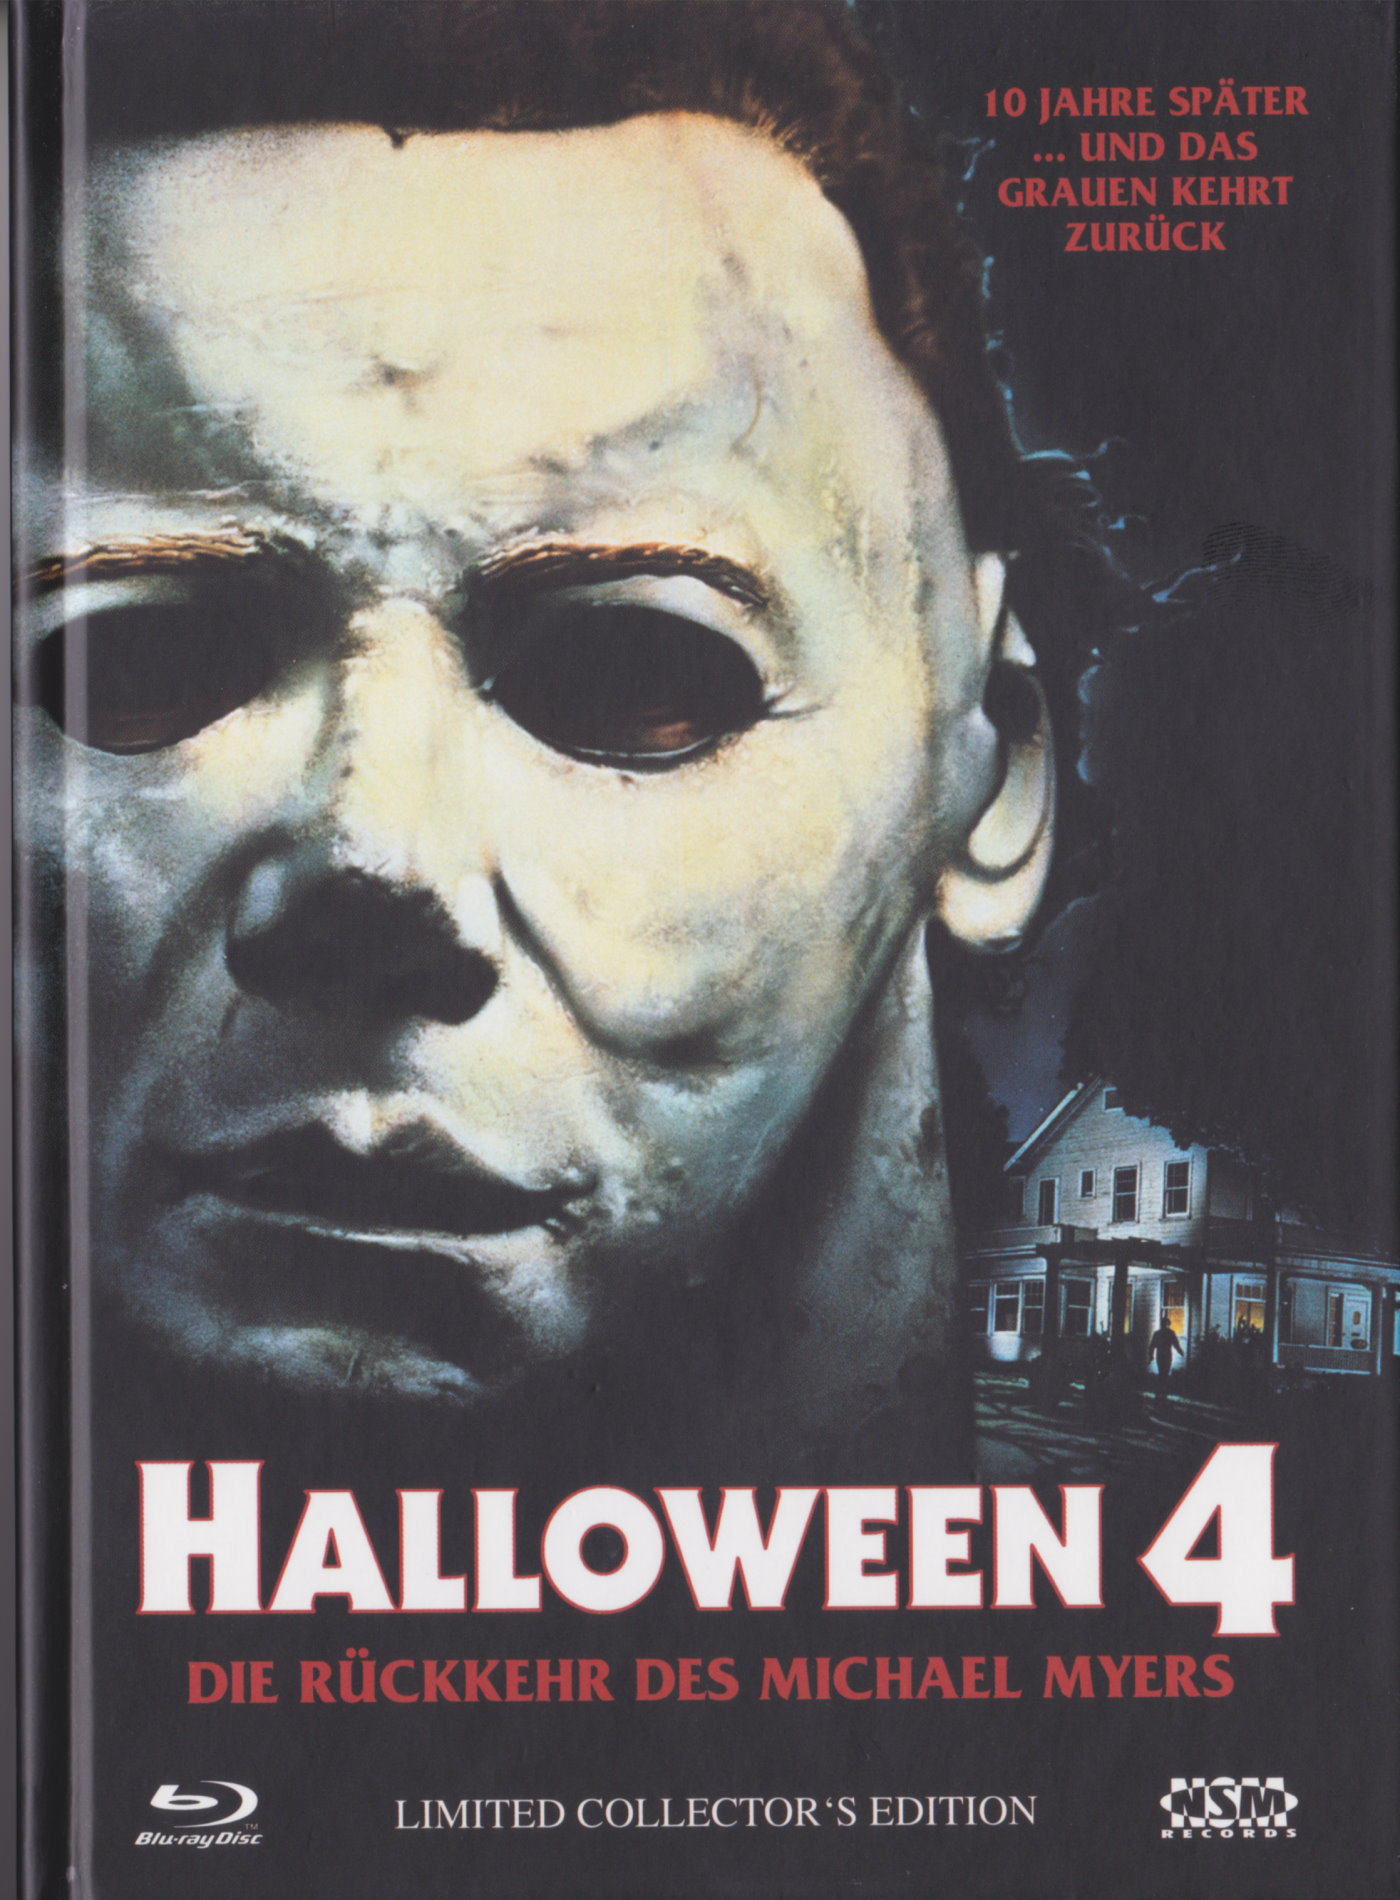 Cover - Halloween 4 - Die Rückkehr des Michael Myers.jpg